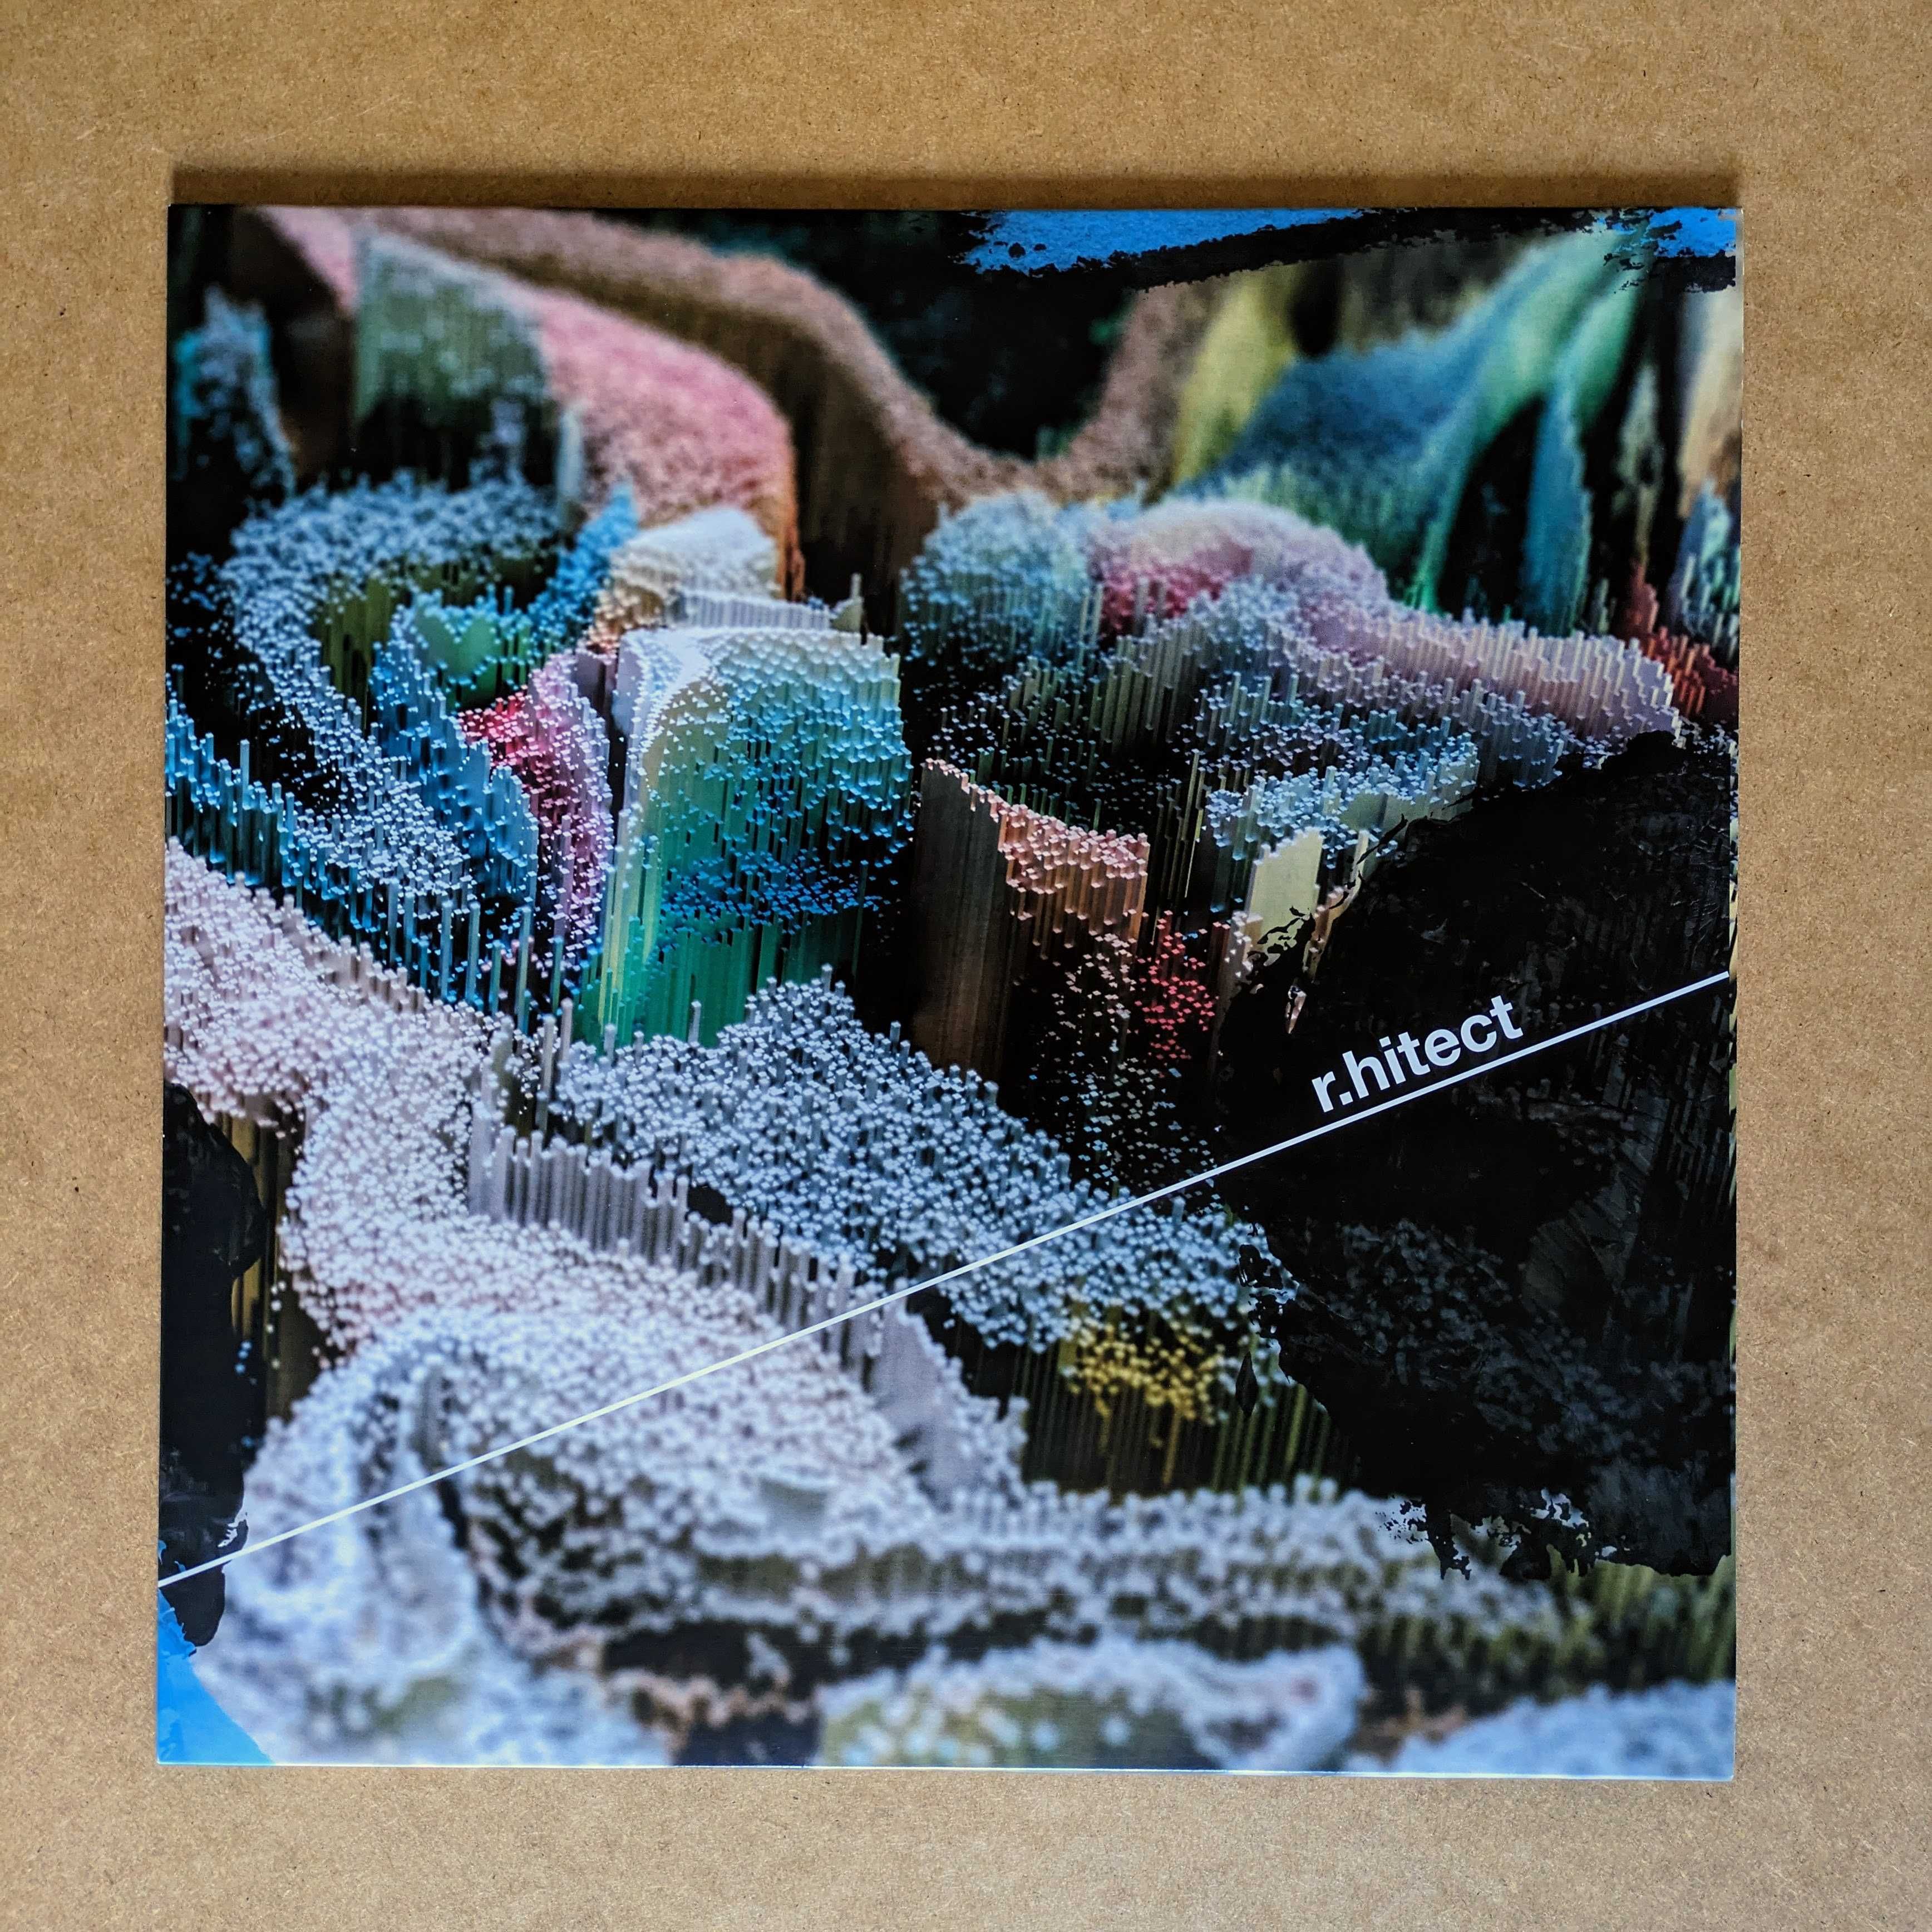 r.hitect – Landscapes EP - Vinyl, Deep House, Minimal